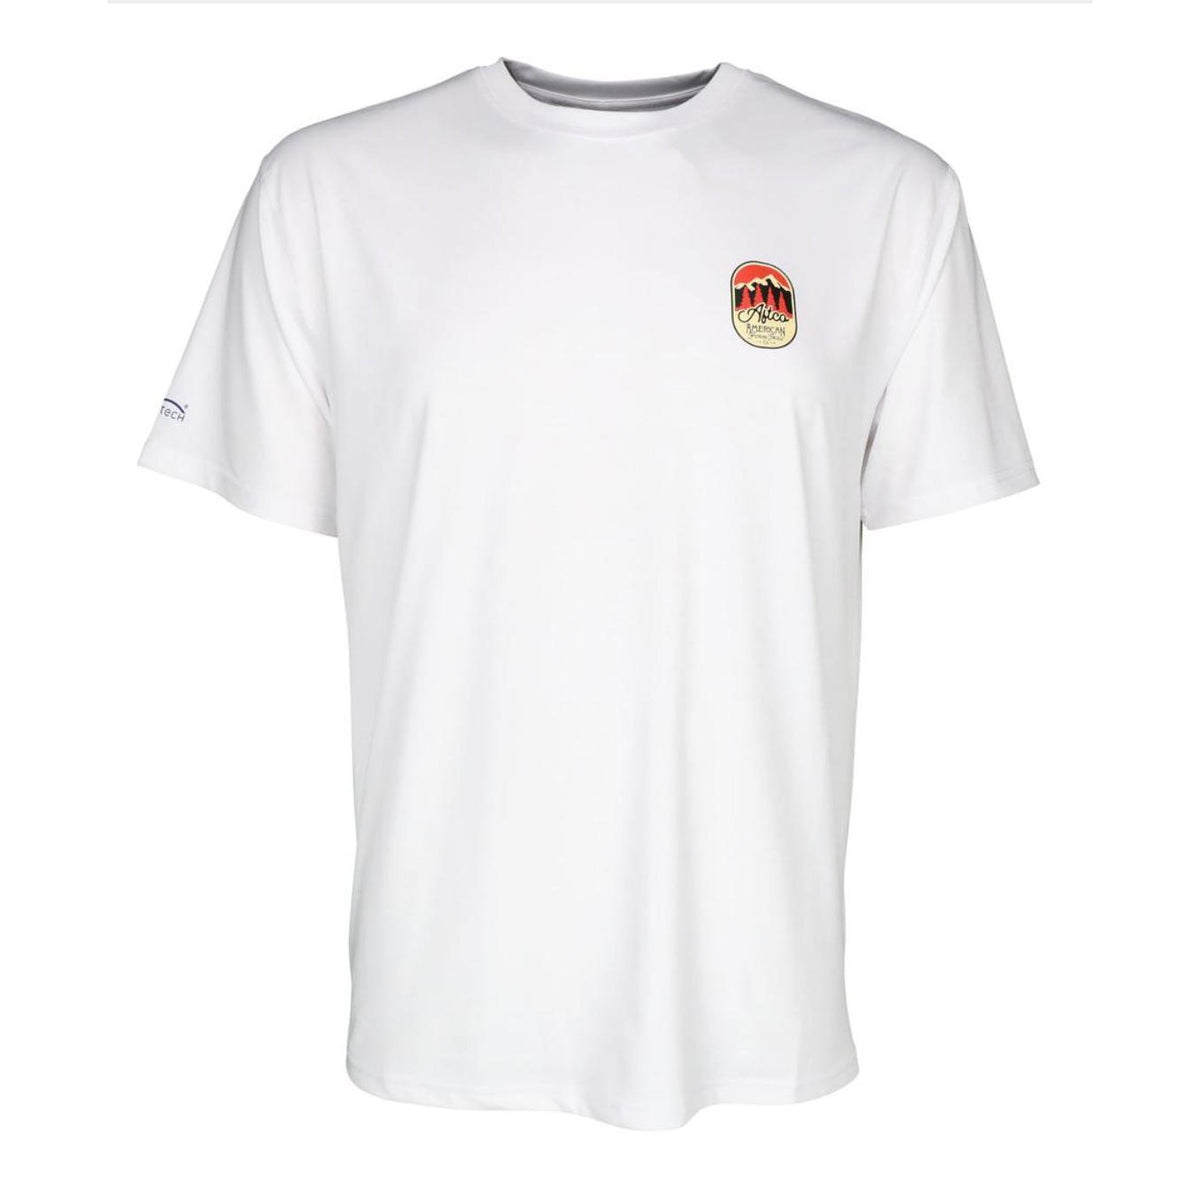 Aftco Binocular Short Sleeve Shirt - White